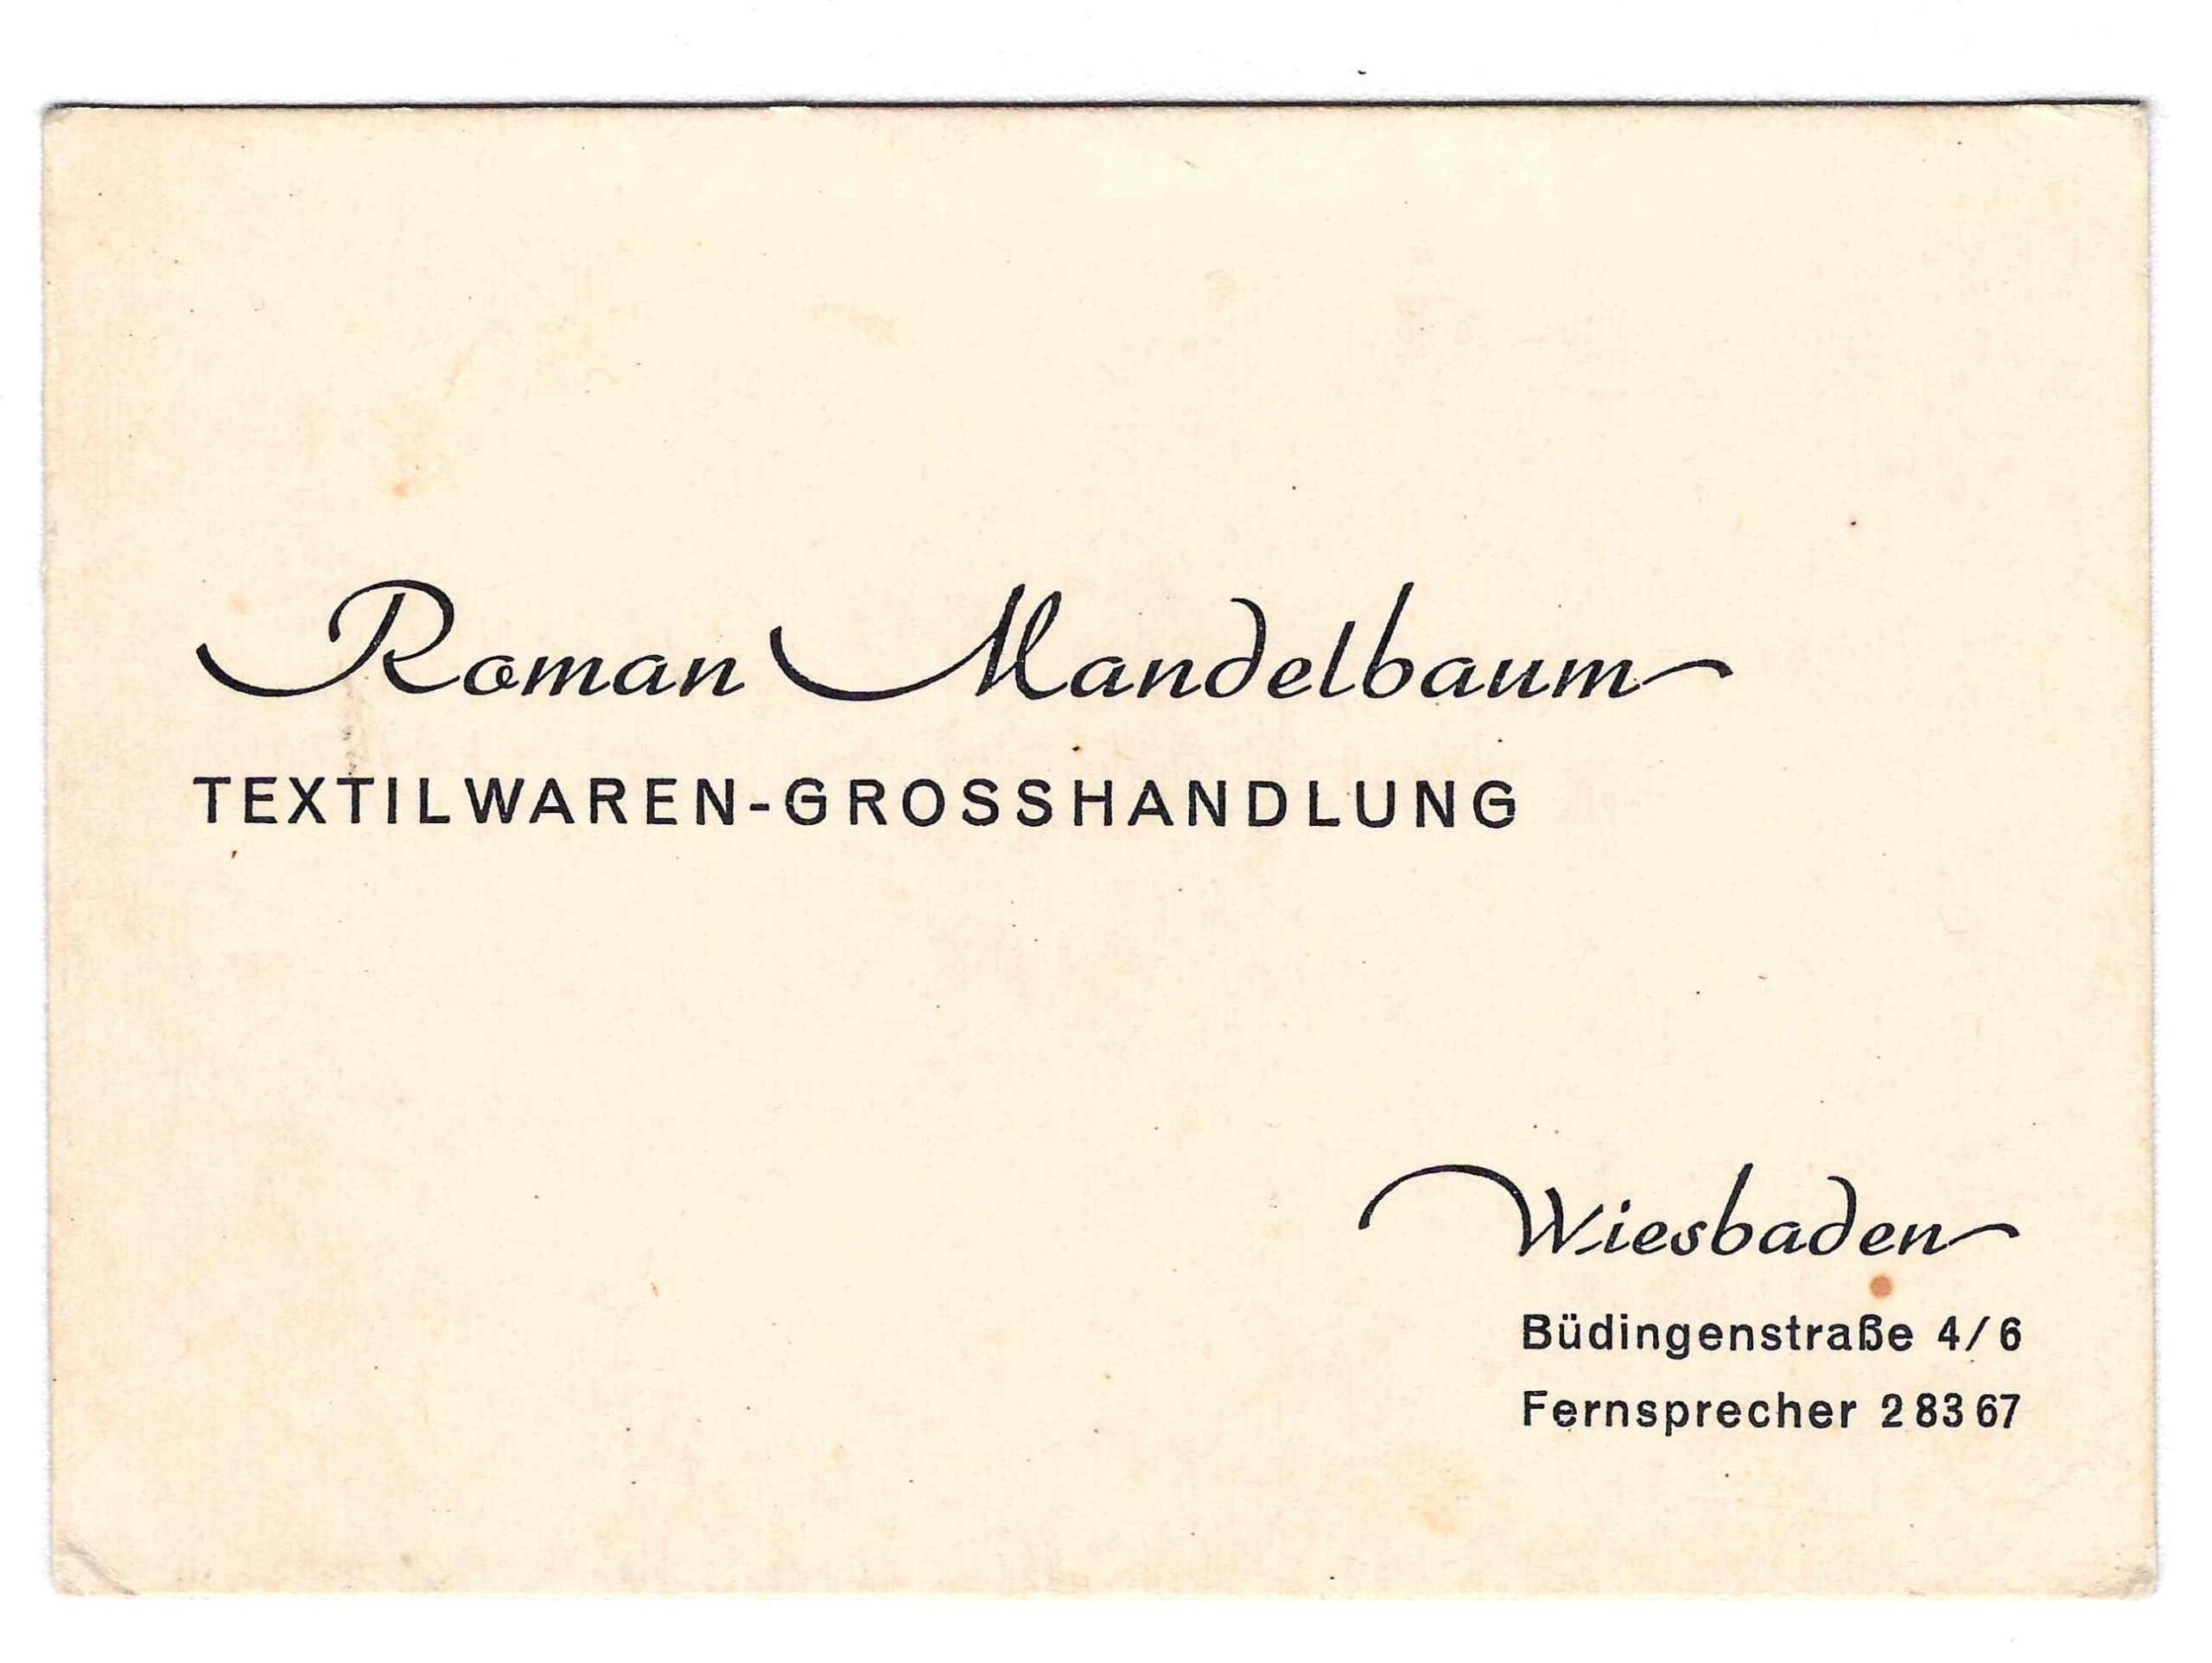 Визитная карточка Р. Мандельбаума. Коллекция Самуила Мандельбаума